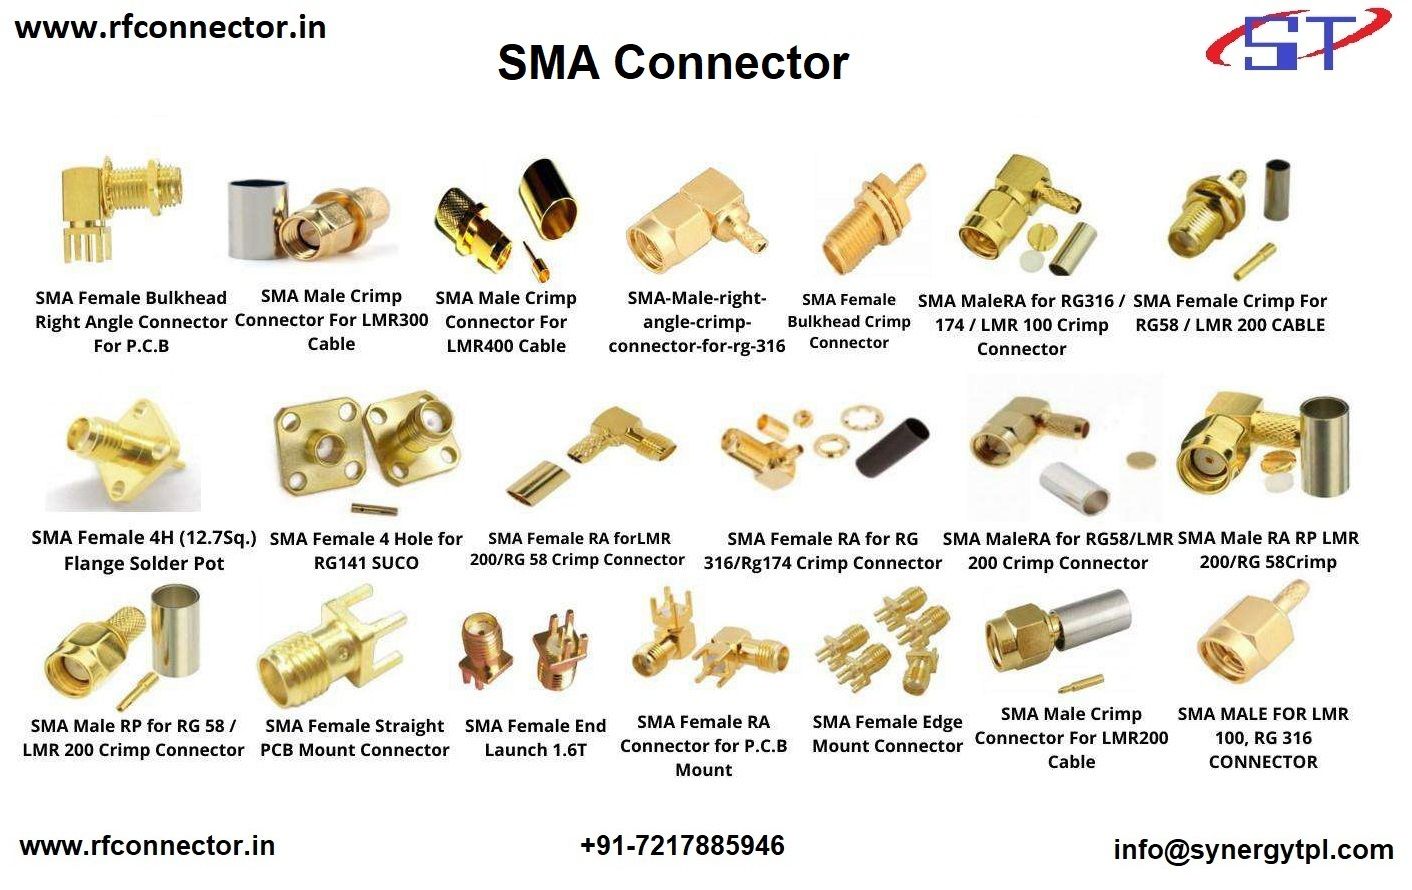 SMA Male for BT 3002 CRIMP connector